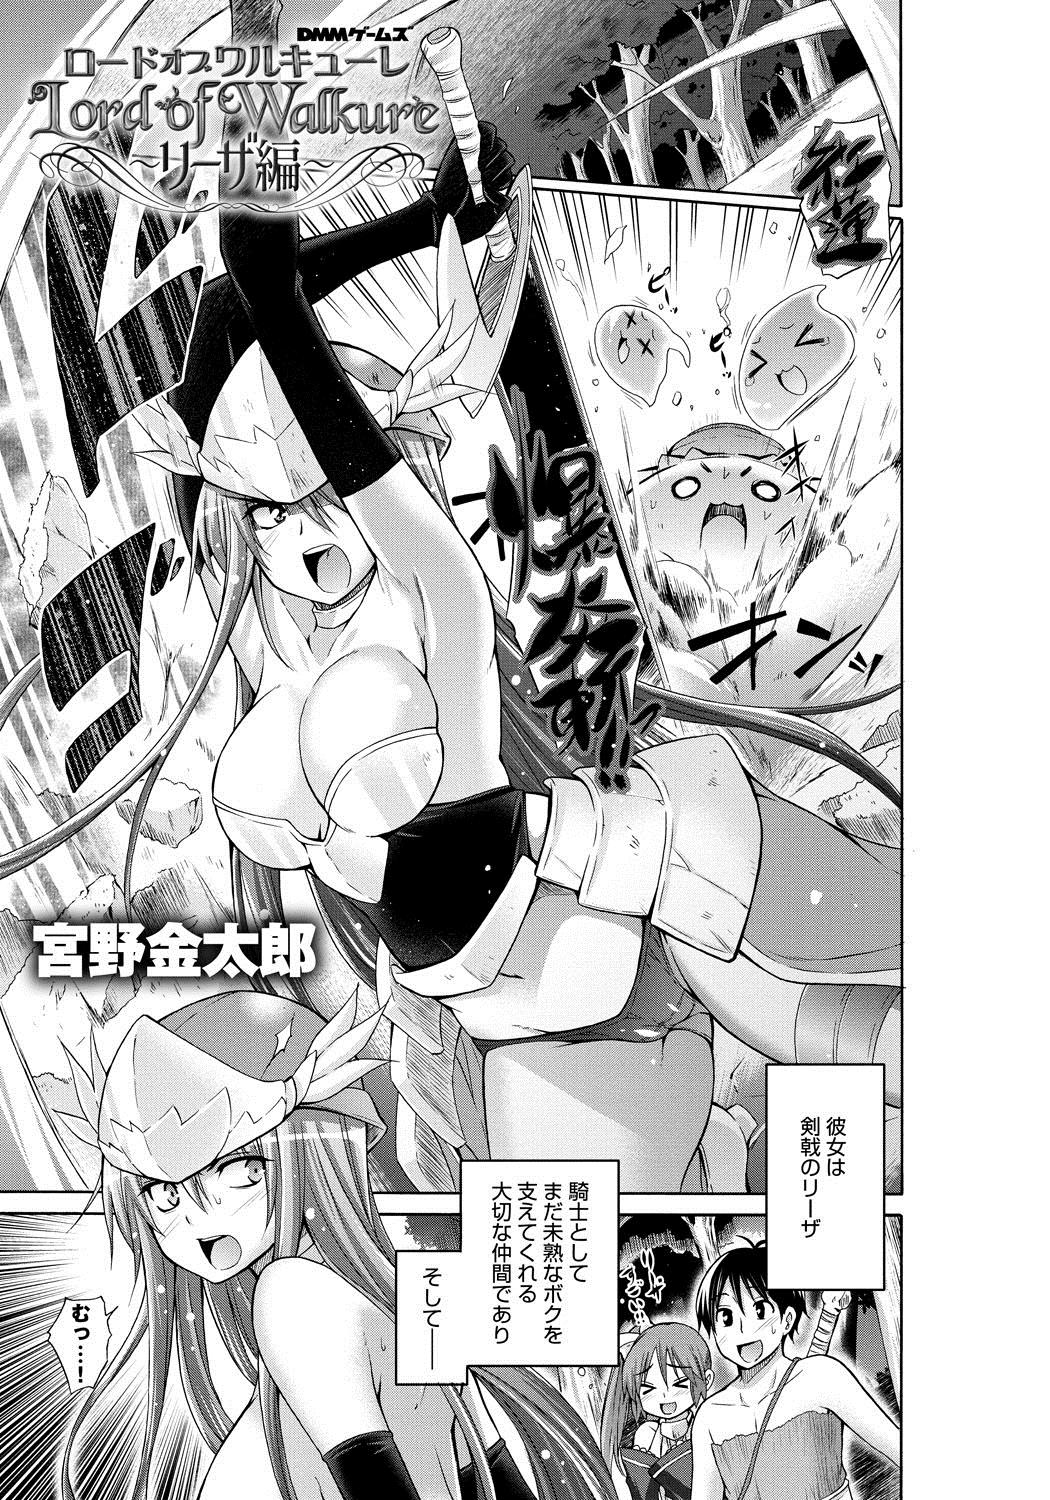 [Anthology] Lord of Walkure Adult Comic Anthology 2 - R-18 Ban de Maiban Ottanoshimi~! ...na Kishi-sama no Koto desu kara Sazoya 55